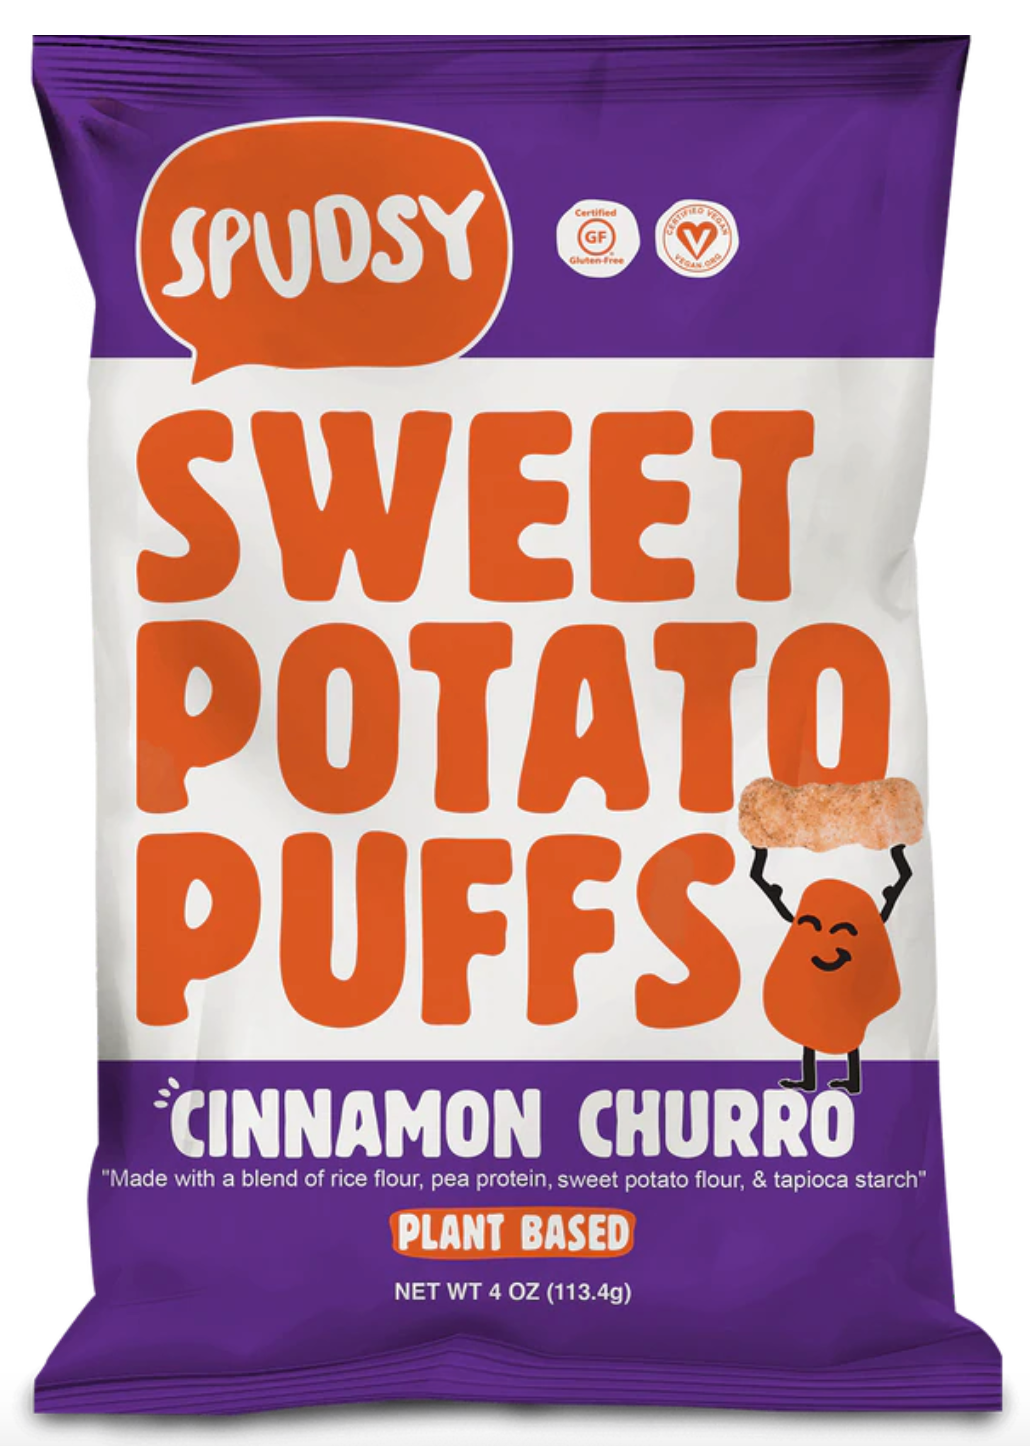 Spudsy Cinnamon Churro Sweet Potato Puffs